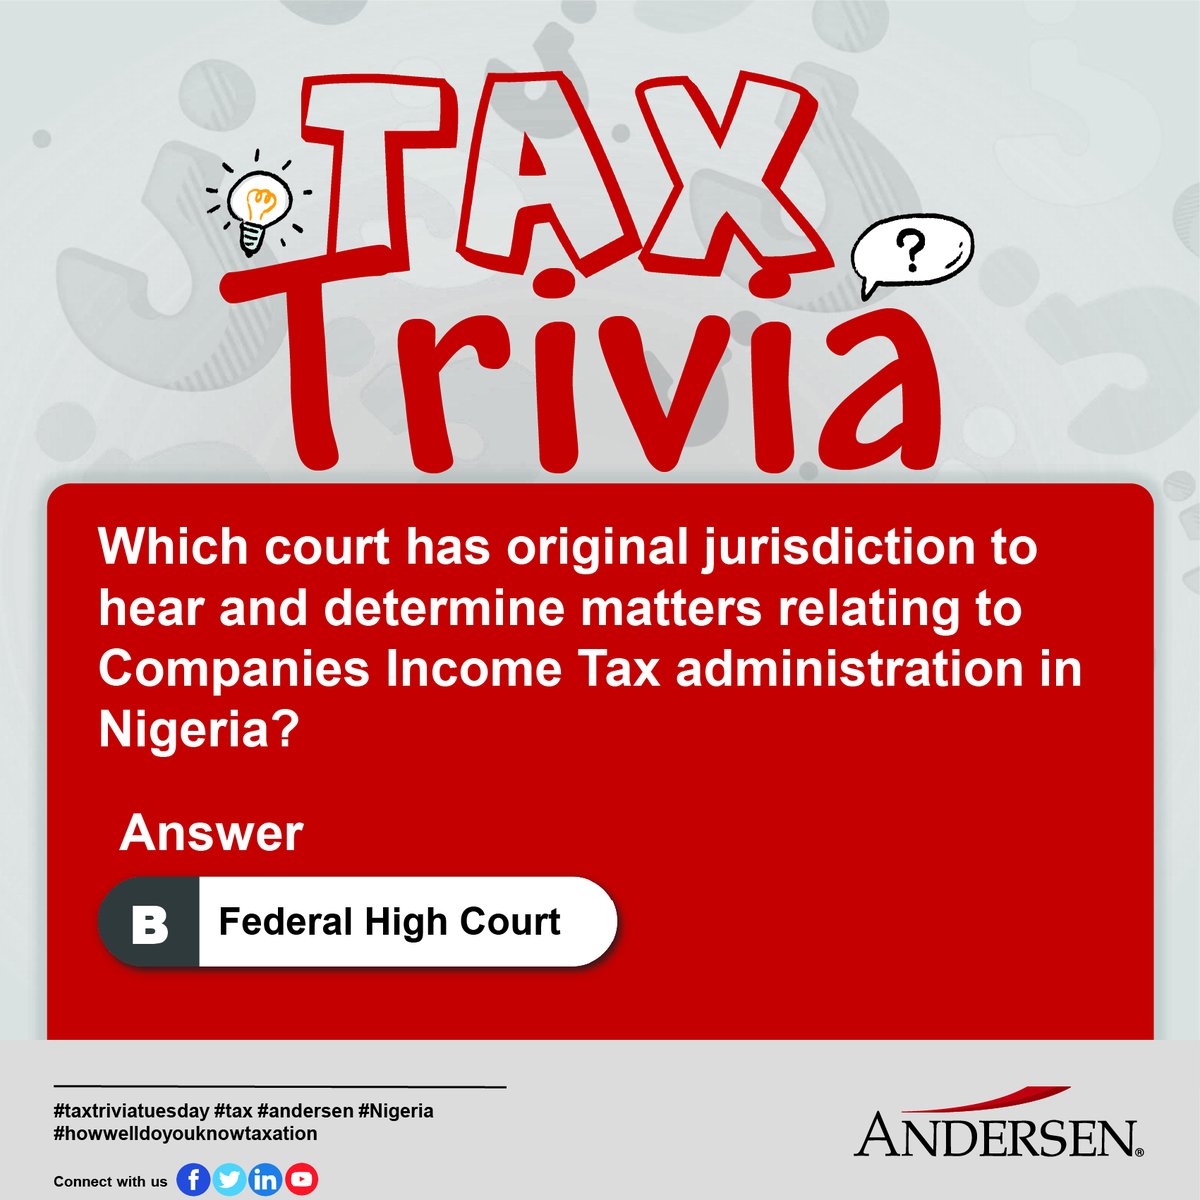 #trivia
#weeklytrivia
#triviachallenge
#CompaniesIncomeTax
#TaxationinNigeria
#NigeriaLegalSystem
#NigeriaCourtSystem
#JurisdictioninNigeria
#HighCourtNigeria
#FederalHighCourtNigeria
#TaxLitigation